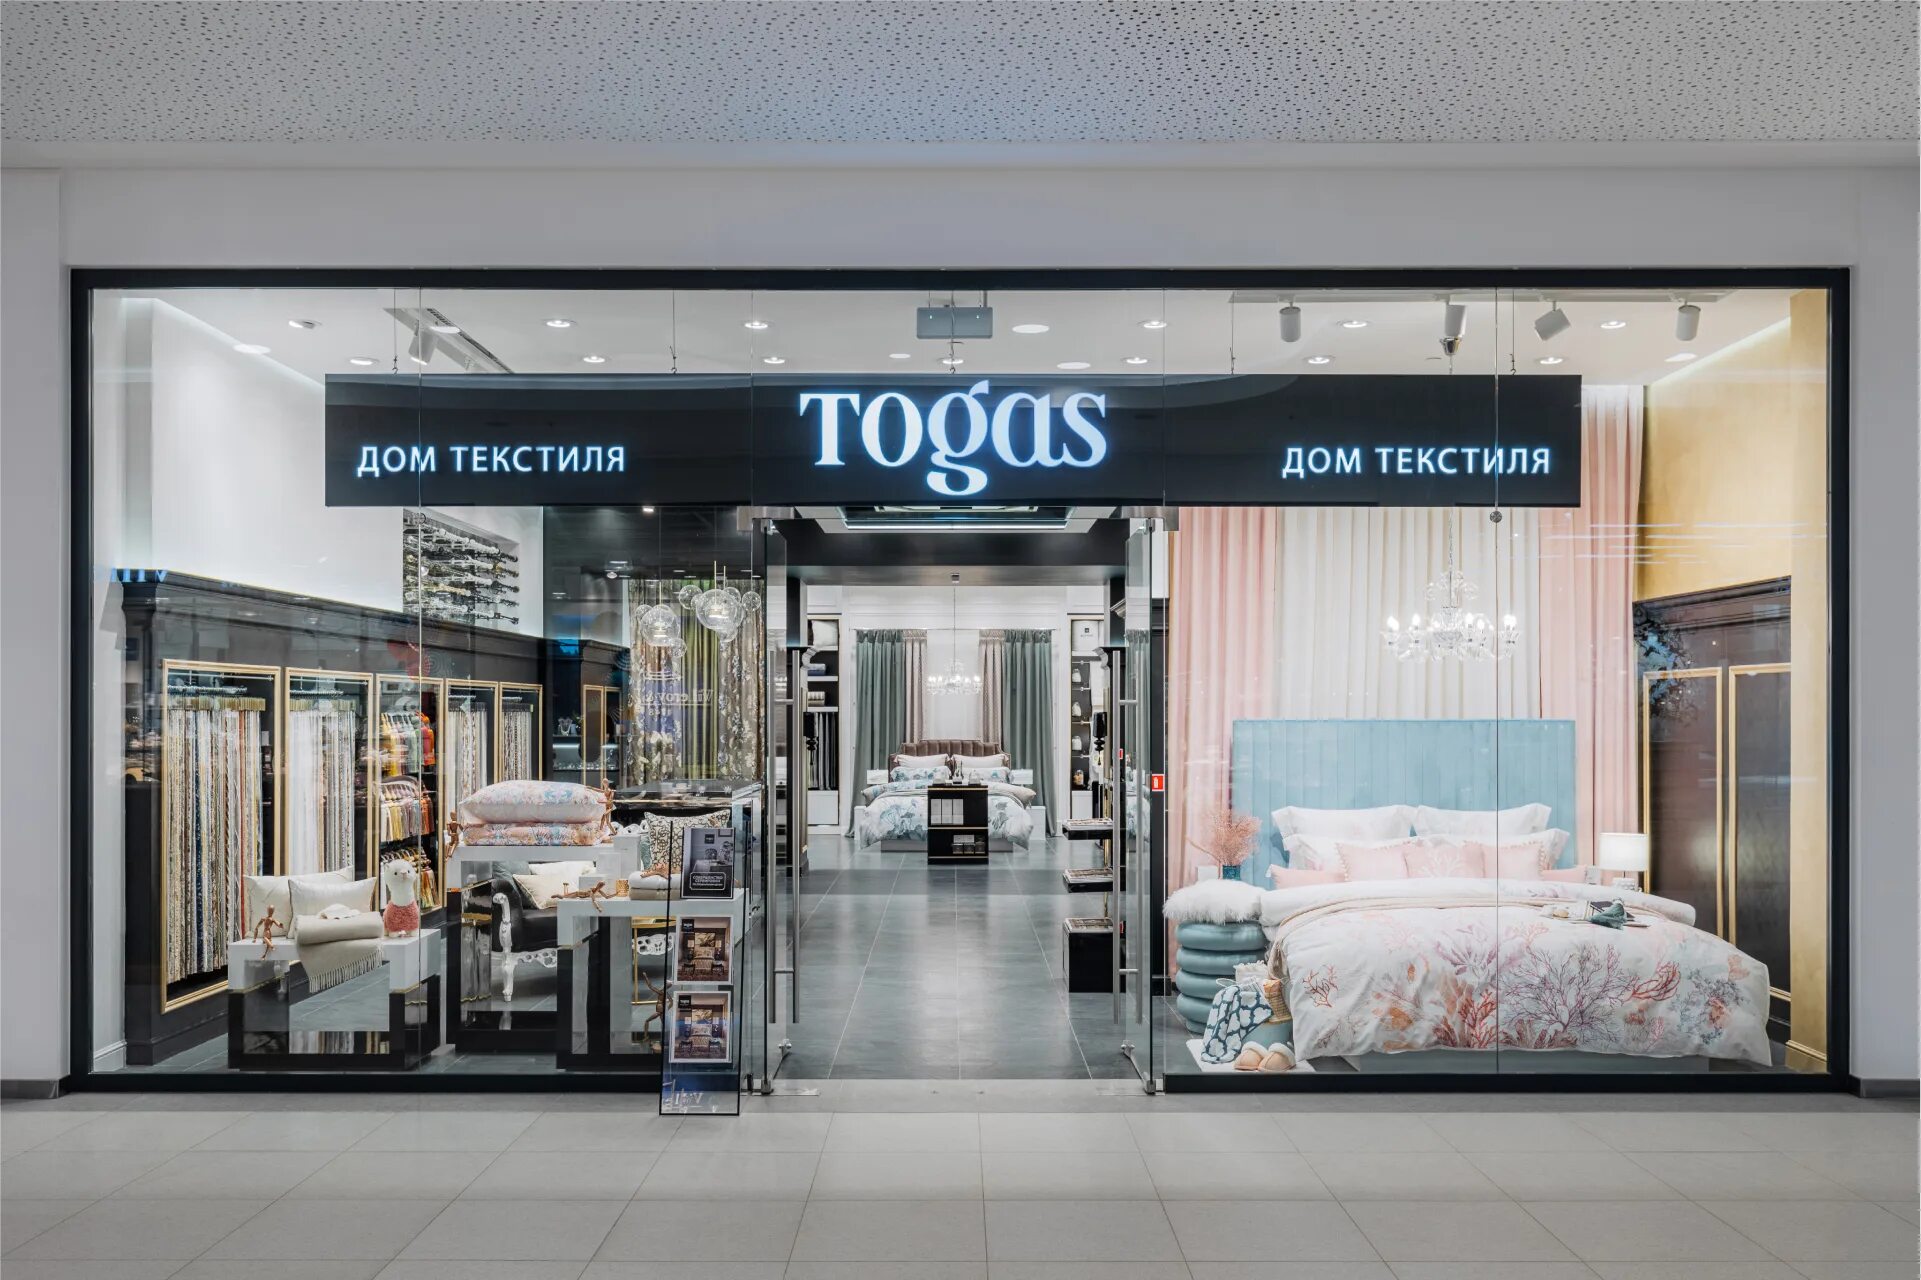 Магазин togas. Тогас. Togas логотип. Тогас магазин. Витрины Тогас.